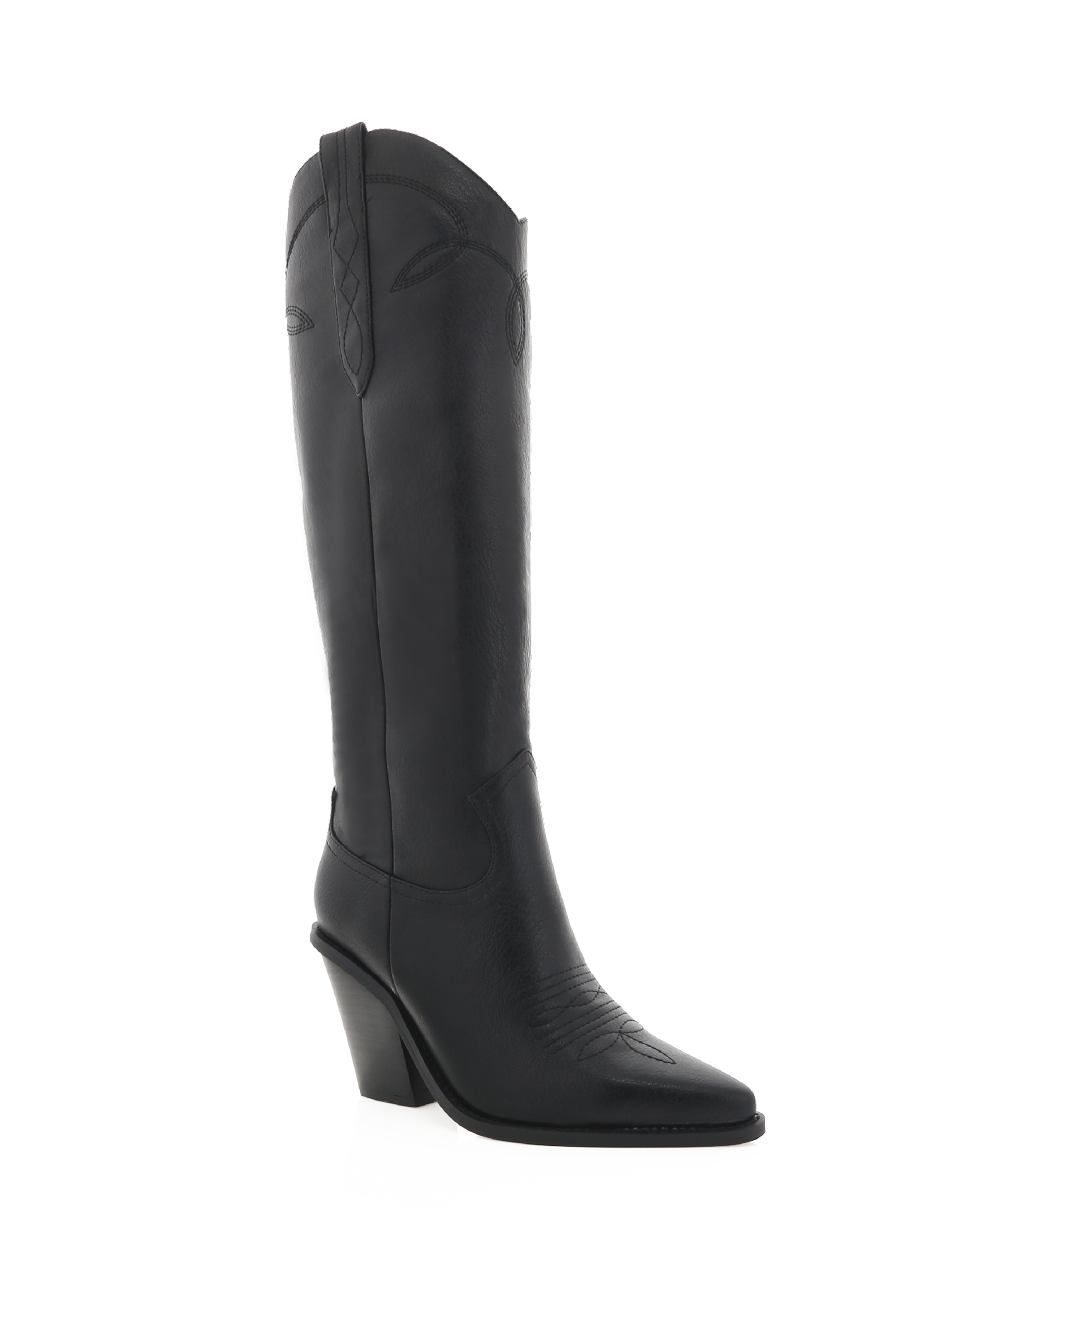 STEELE - BLACK-Boots-Billini-BILLINI USA